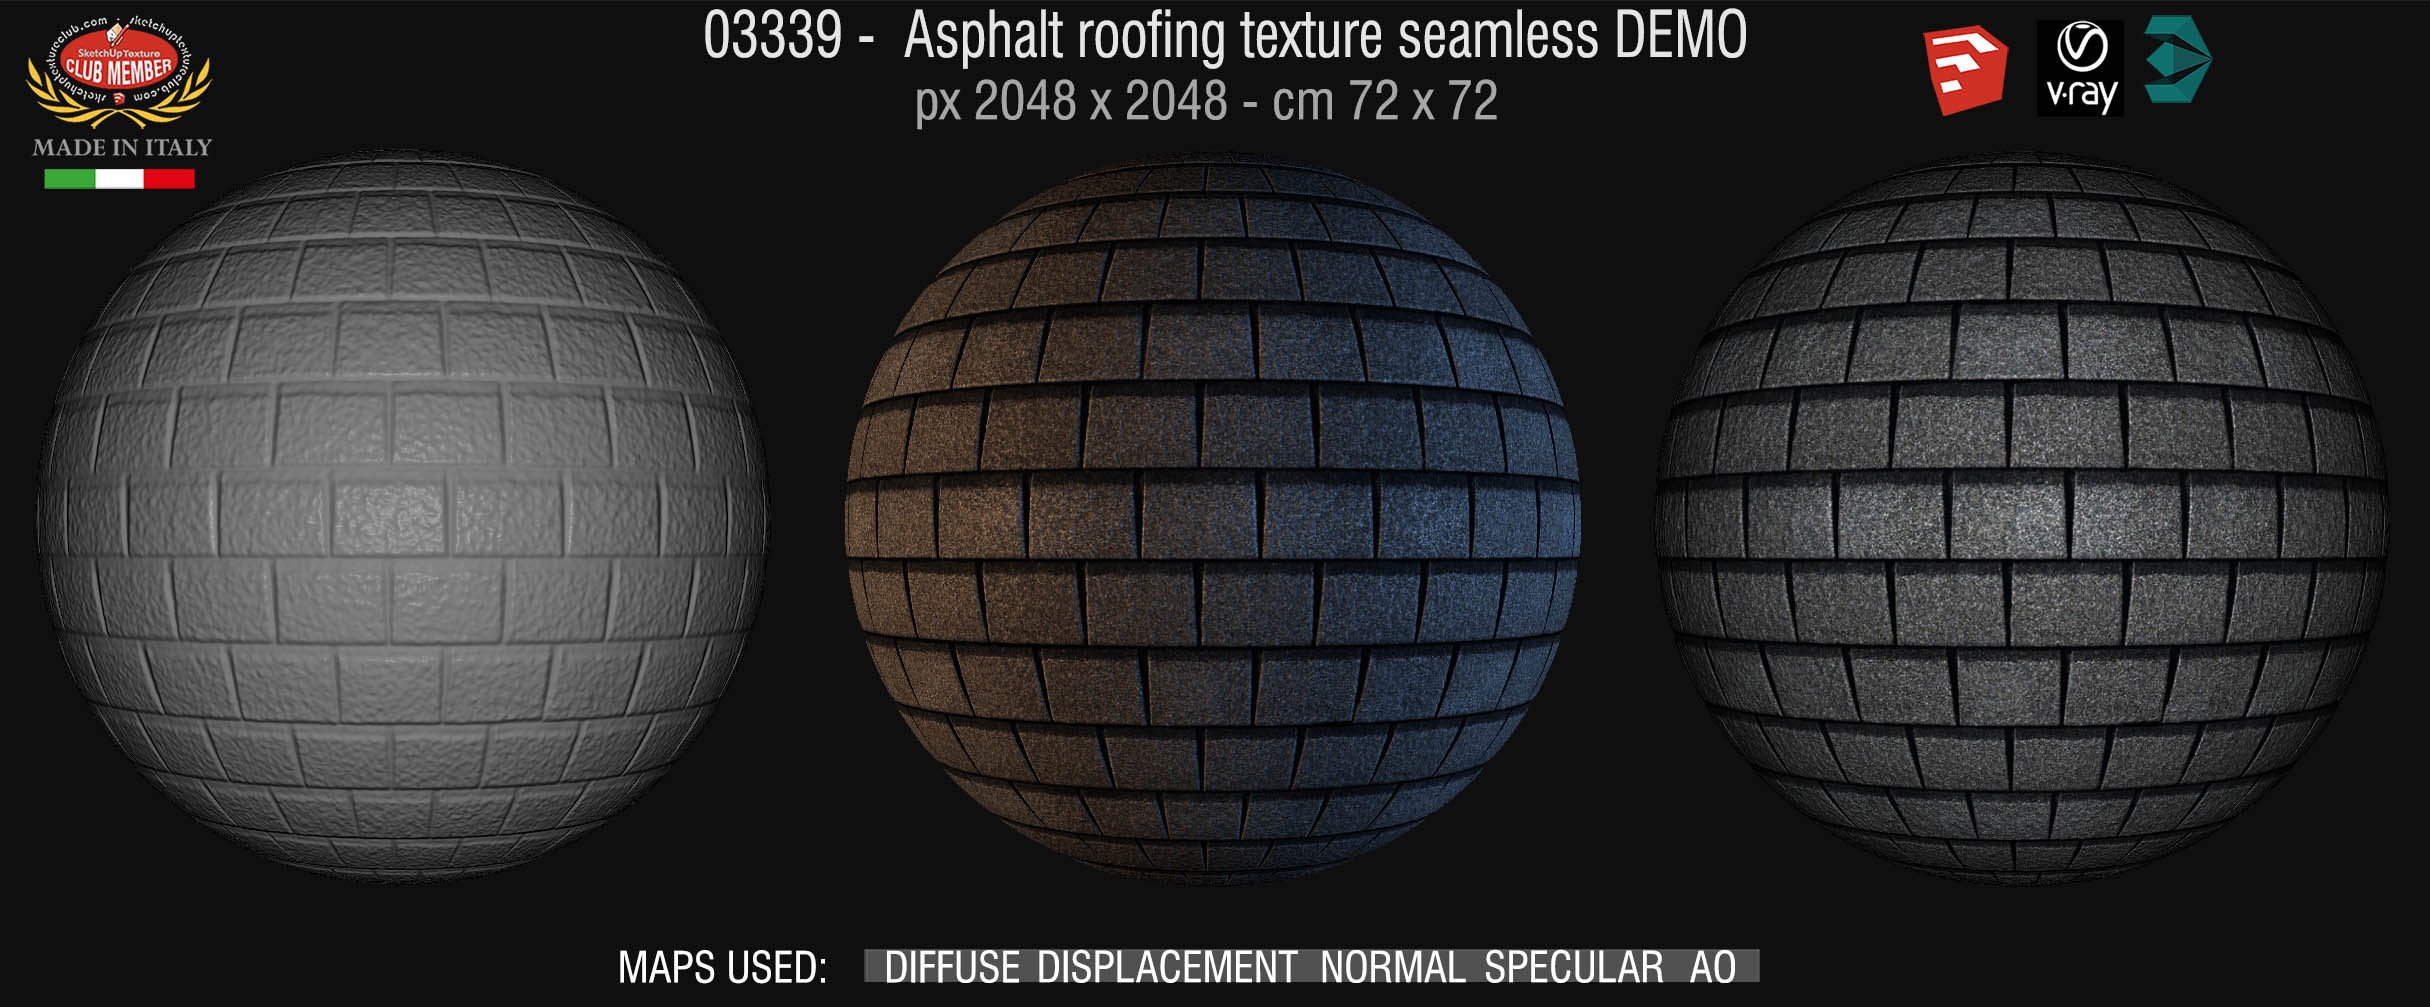 03339 Asphalt roofing texture seamless + maps DEMO